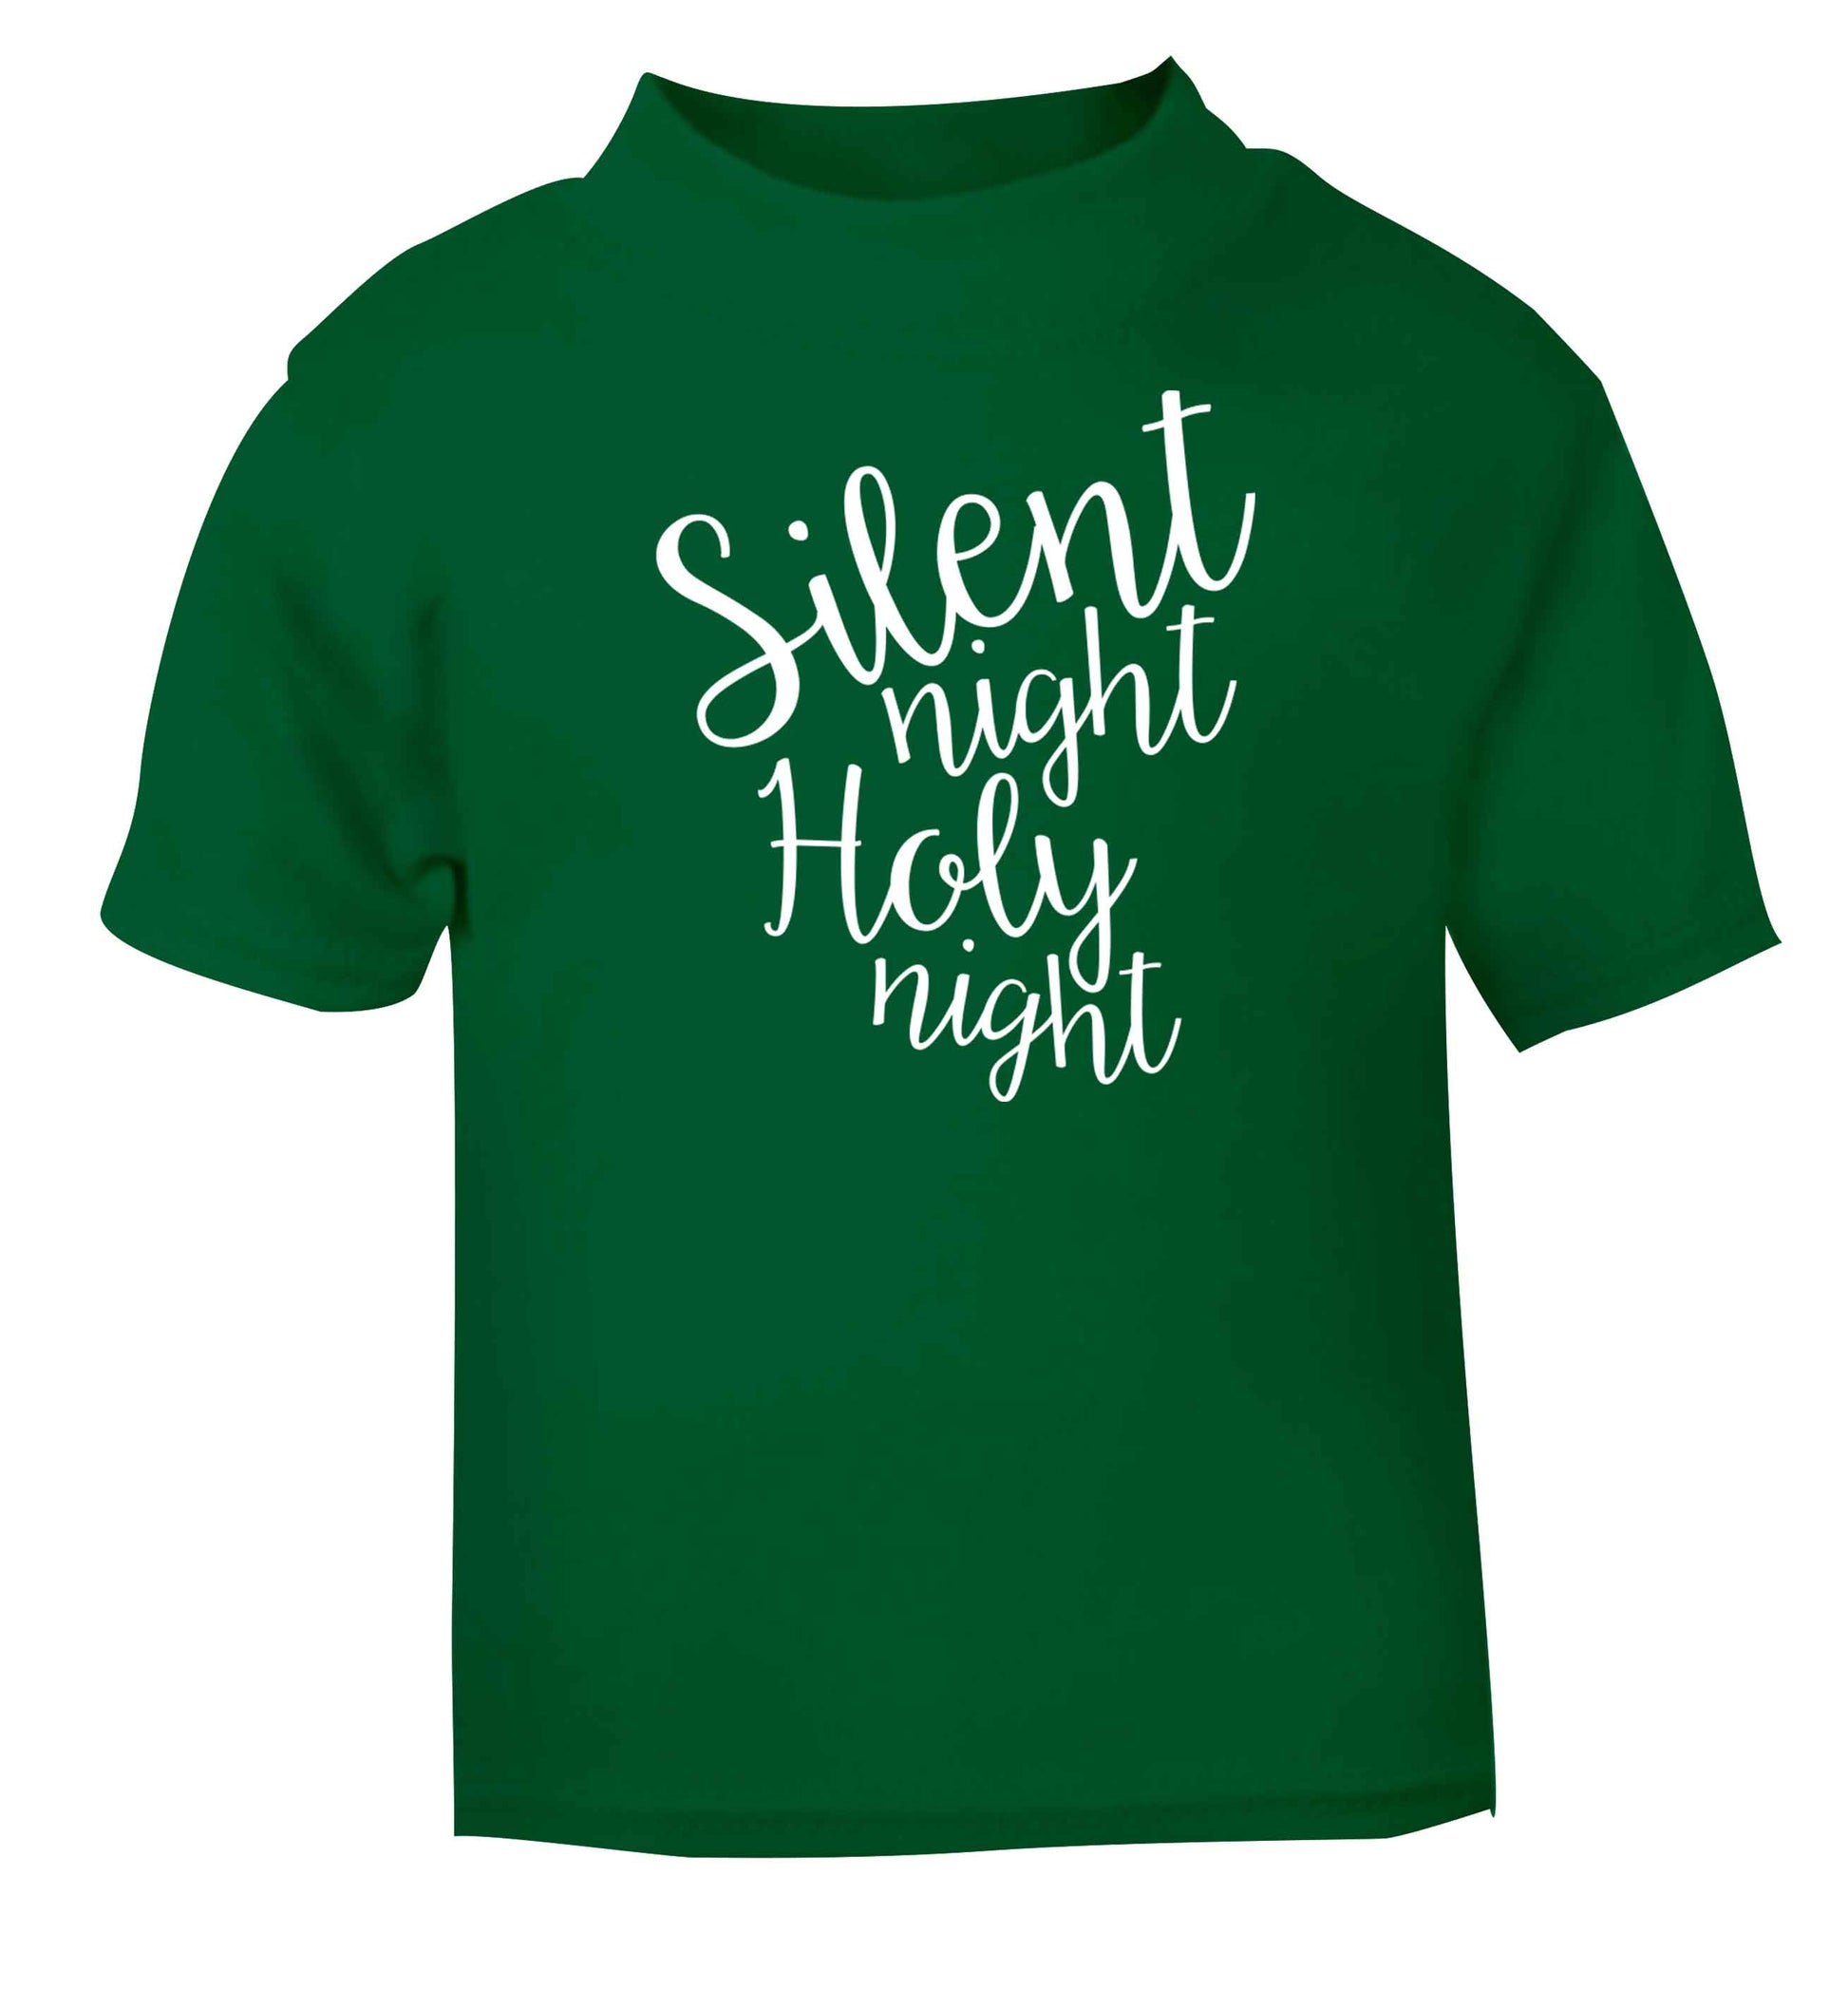 Silent night holy night green baby toddler Tshirt 2 Years